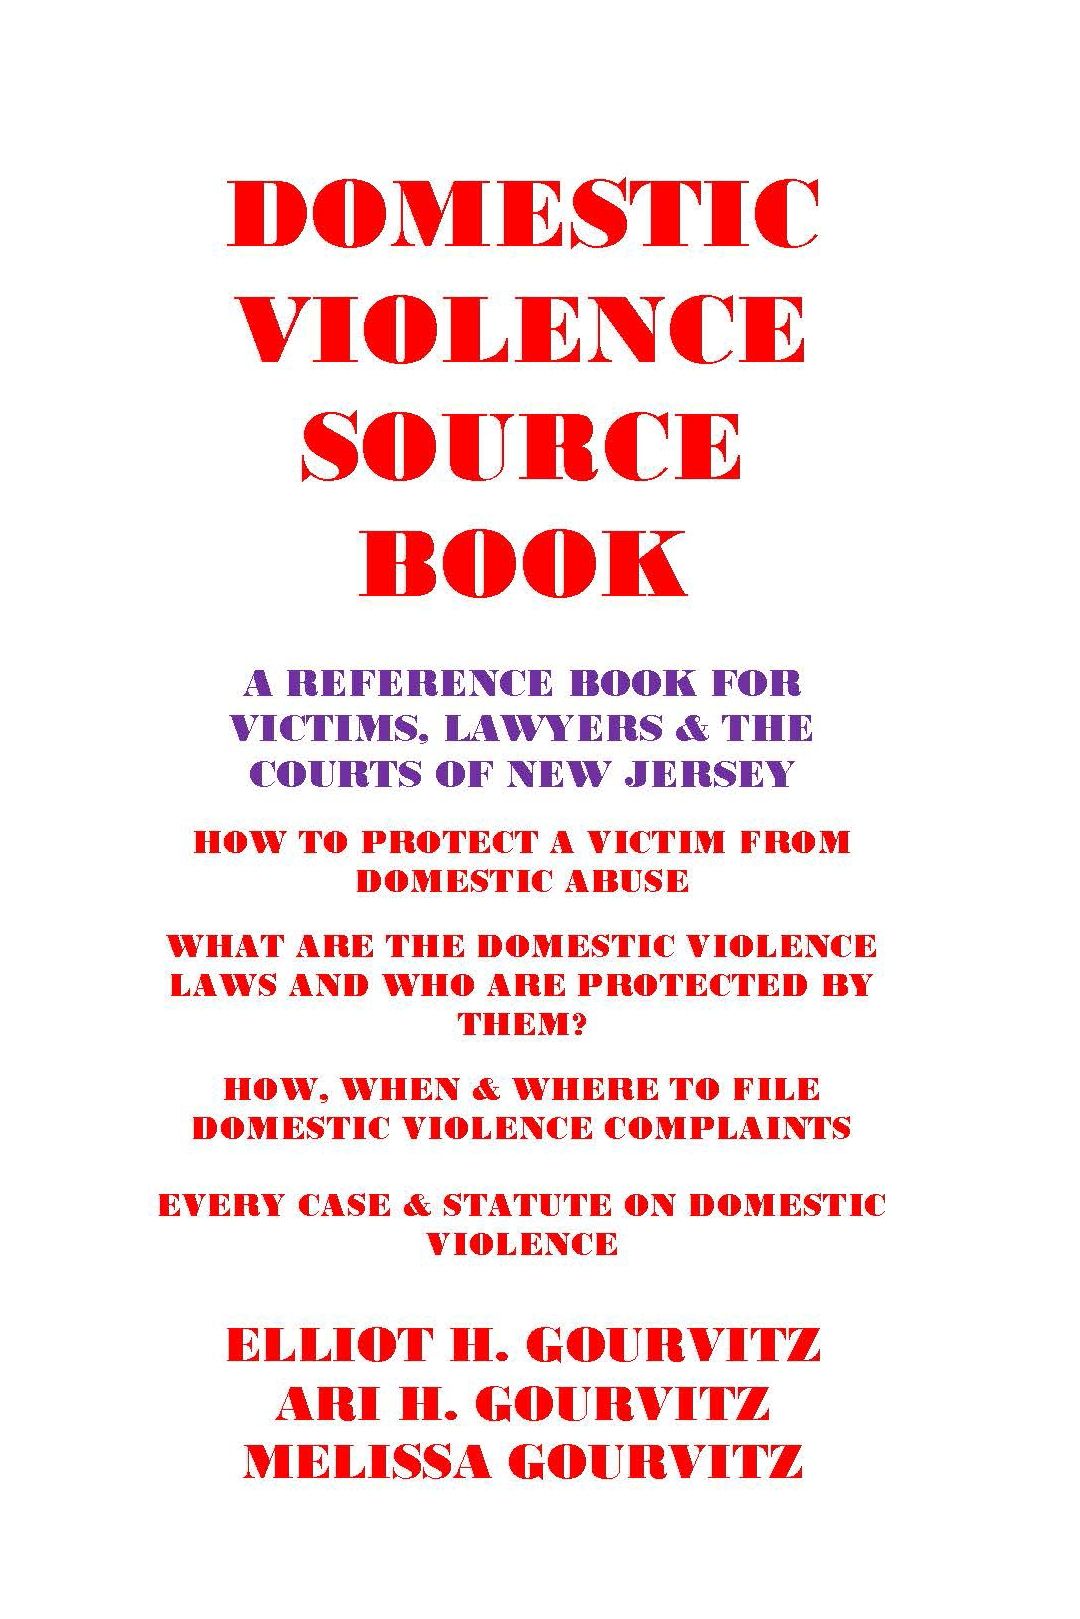 DOMESTIC VIOLENCE SOURCE BOOK